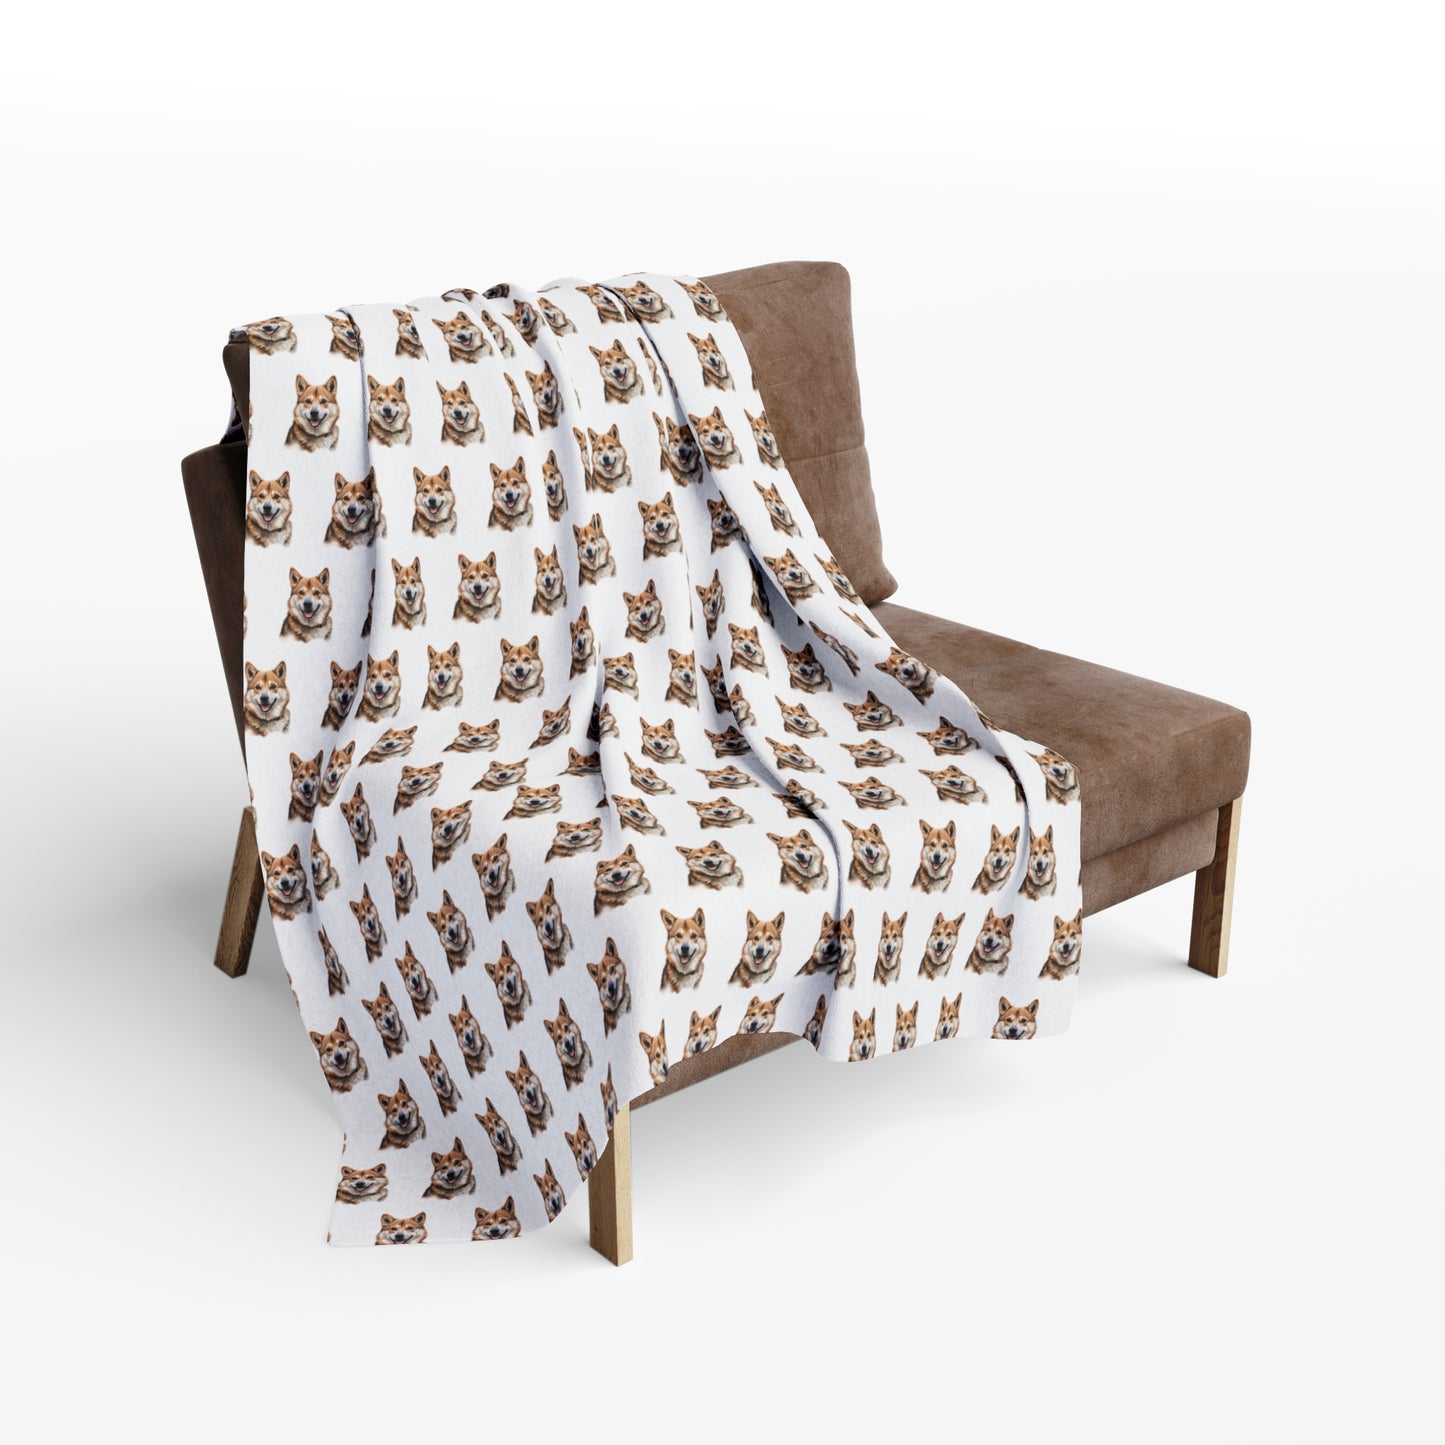 akita fleece blanket draped over a chair